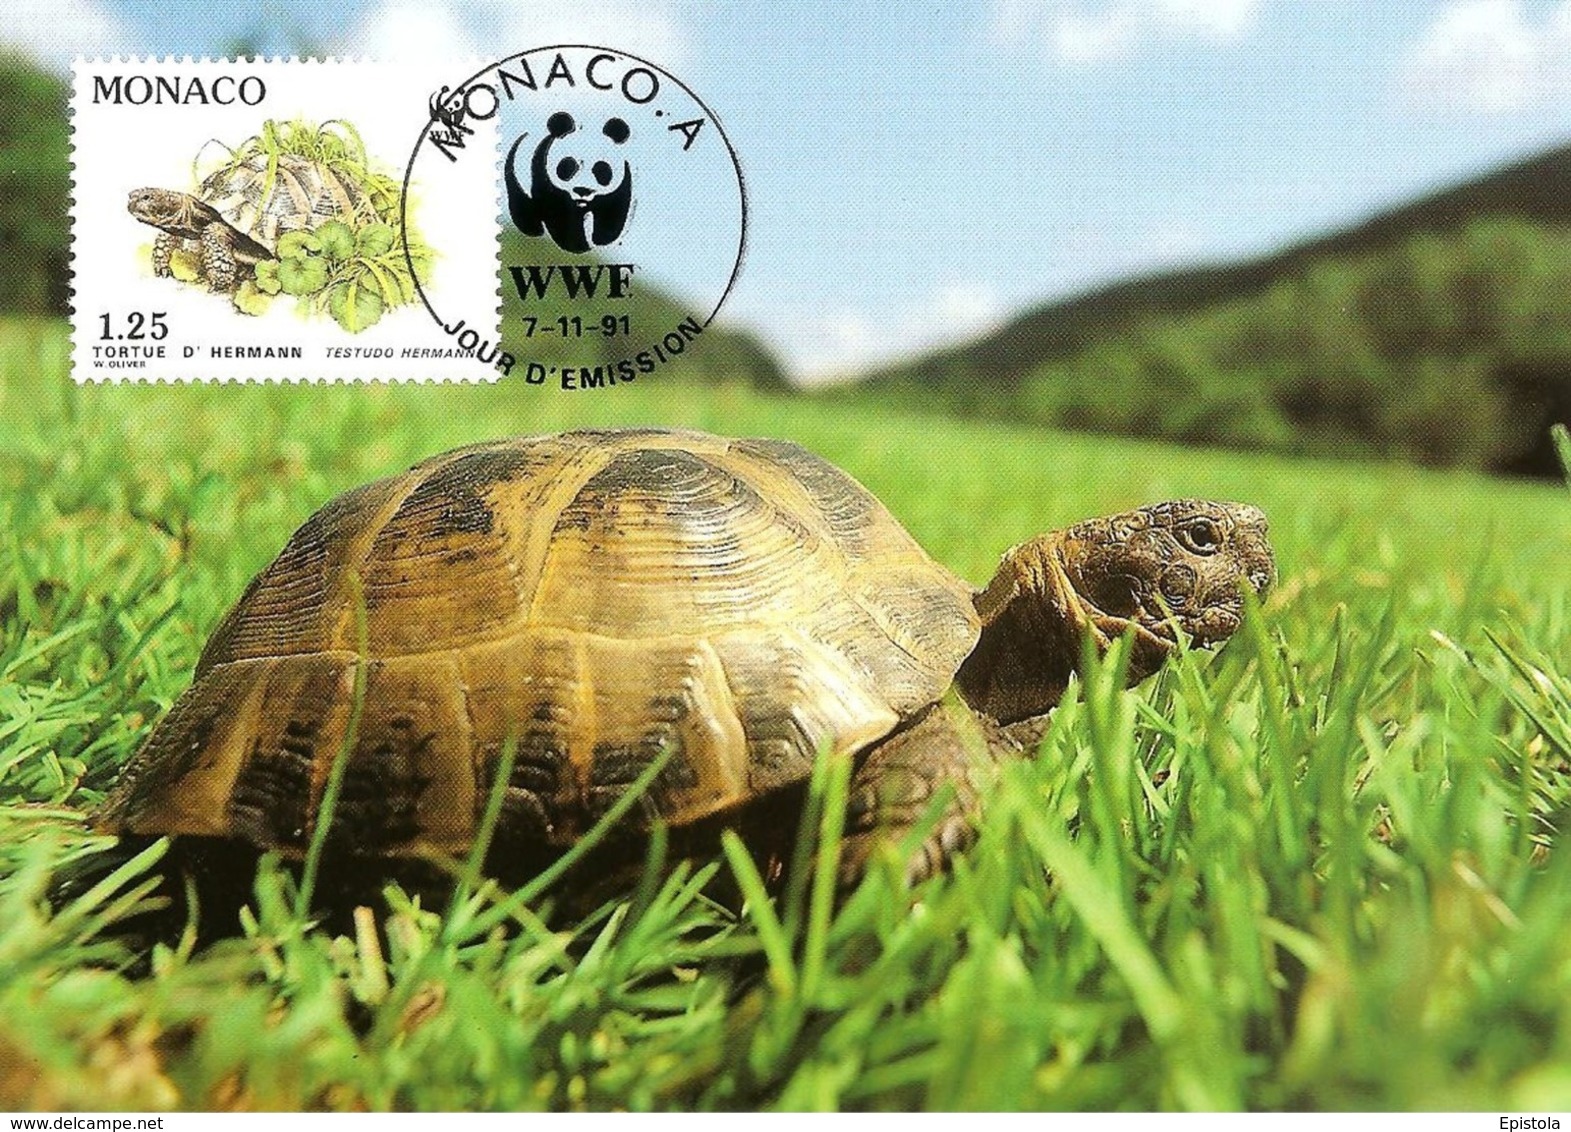 1991 - MONACO - Tortue Hermann Tortoise WWF - Colecciones & Lotes